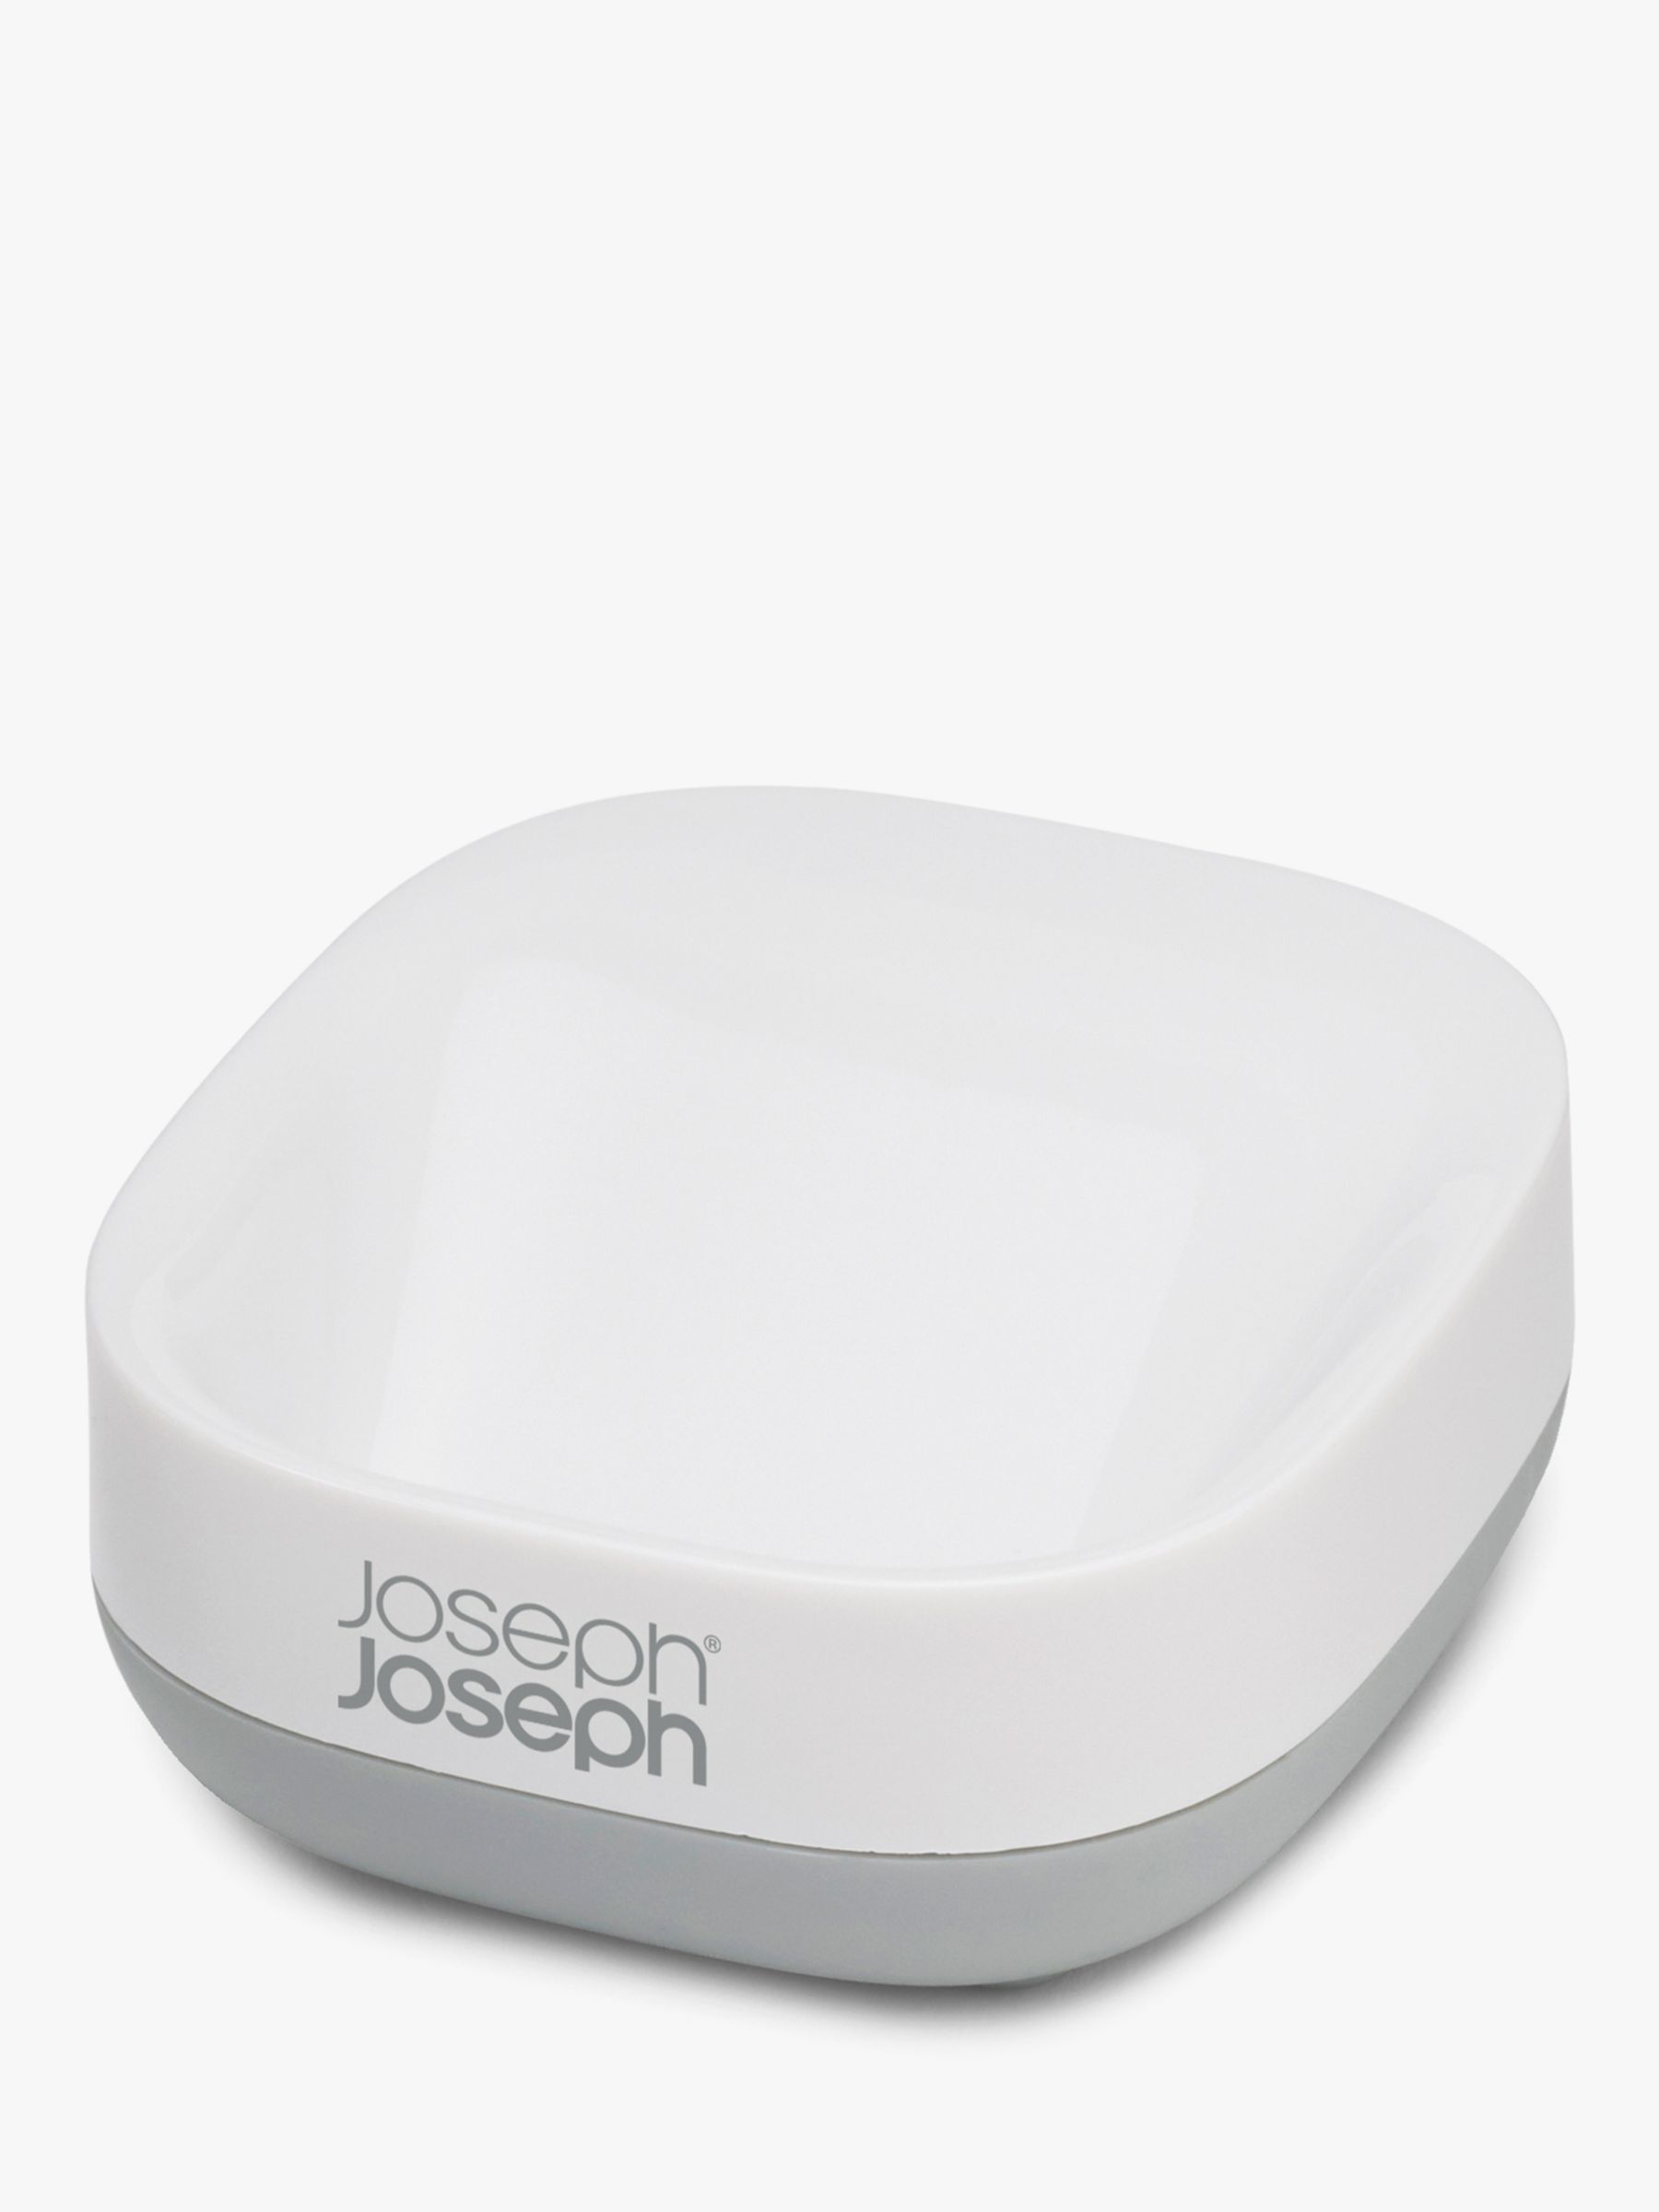 Joseph Bathroom Slim Compact Soap Dish Drain Angle Plastic White/Grey New UK 